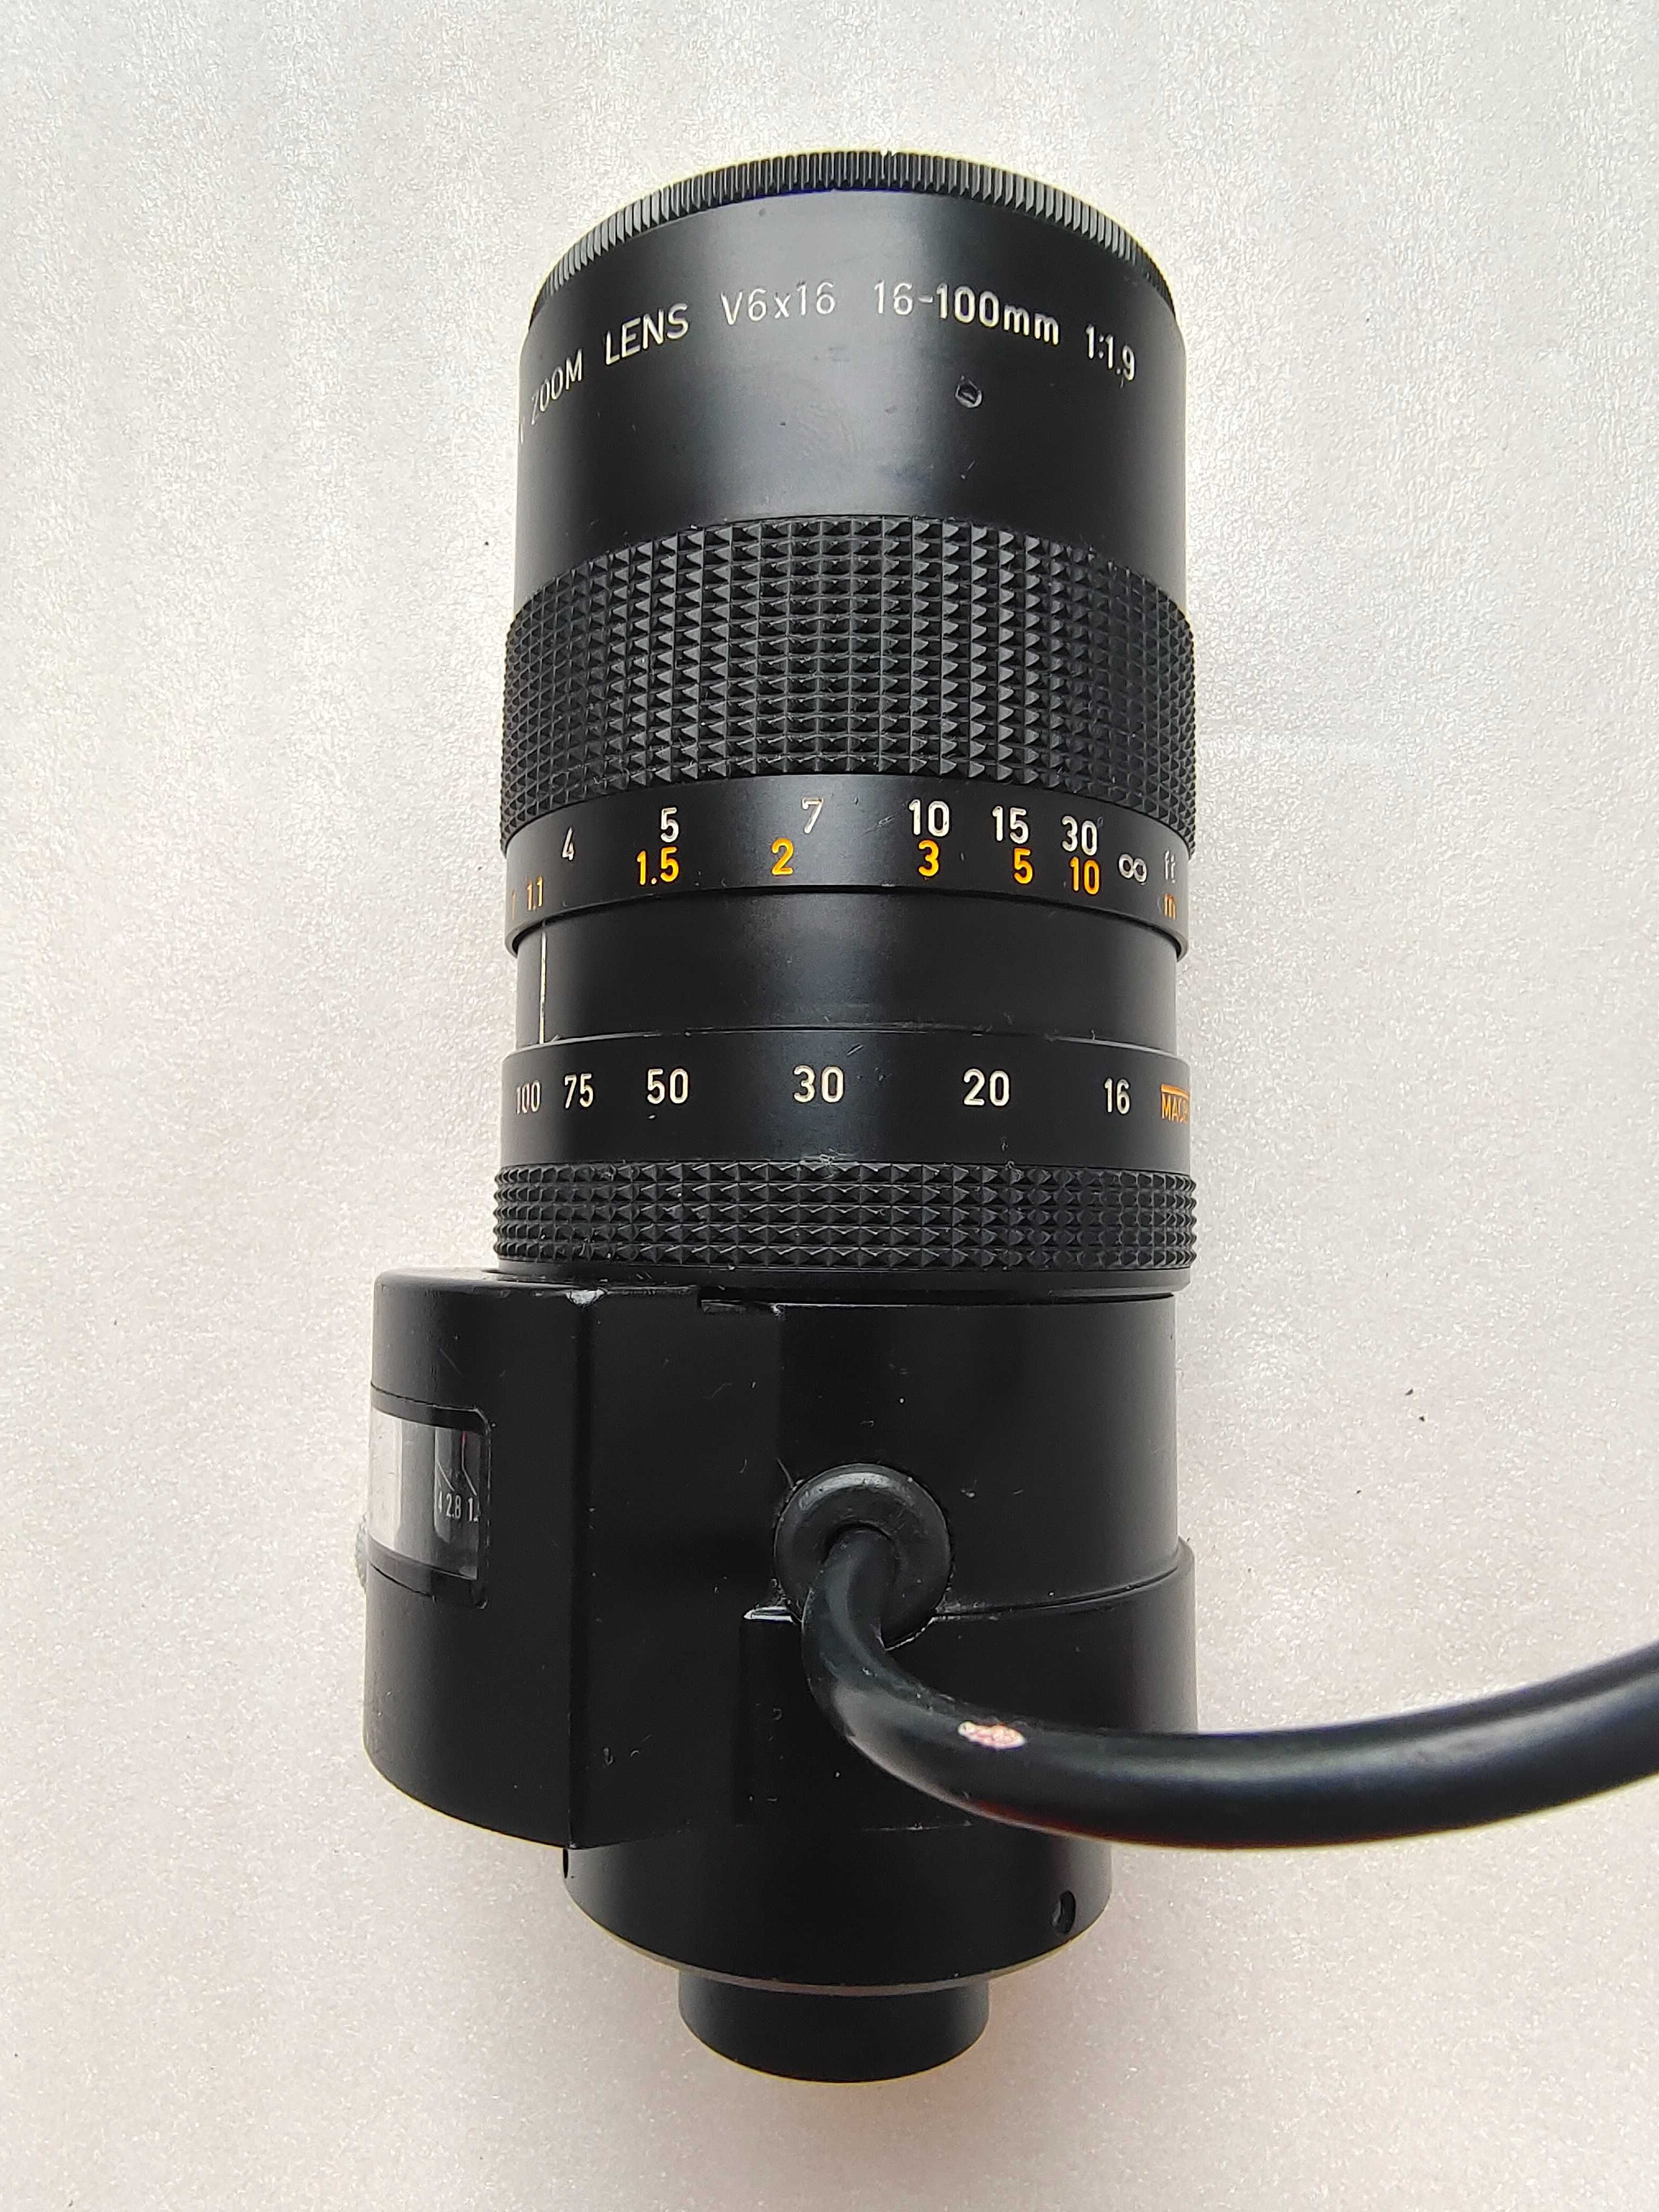 Obiektyw Canon TV ZOOM LENS V6x16, 16-100mm, F1,9